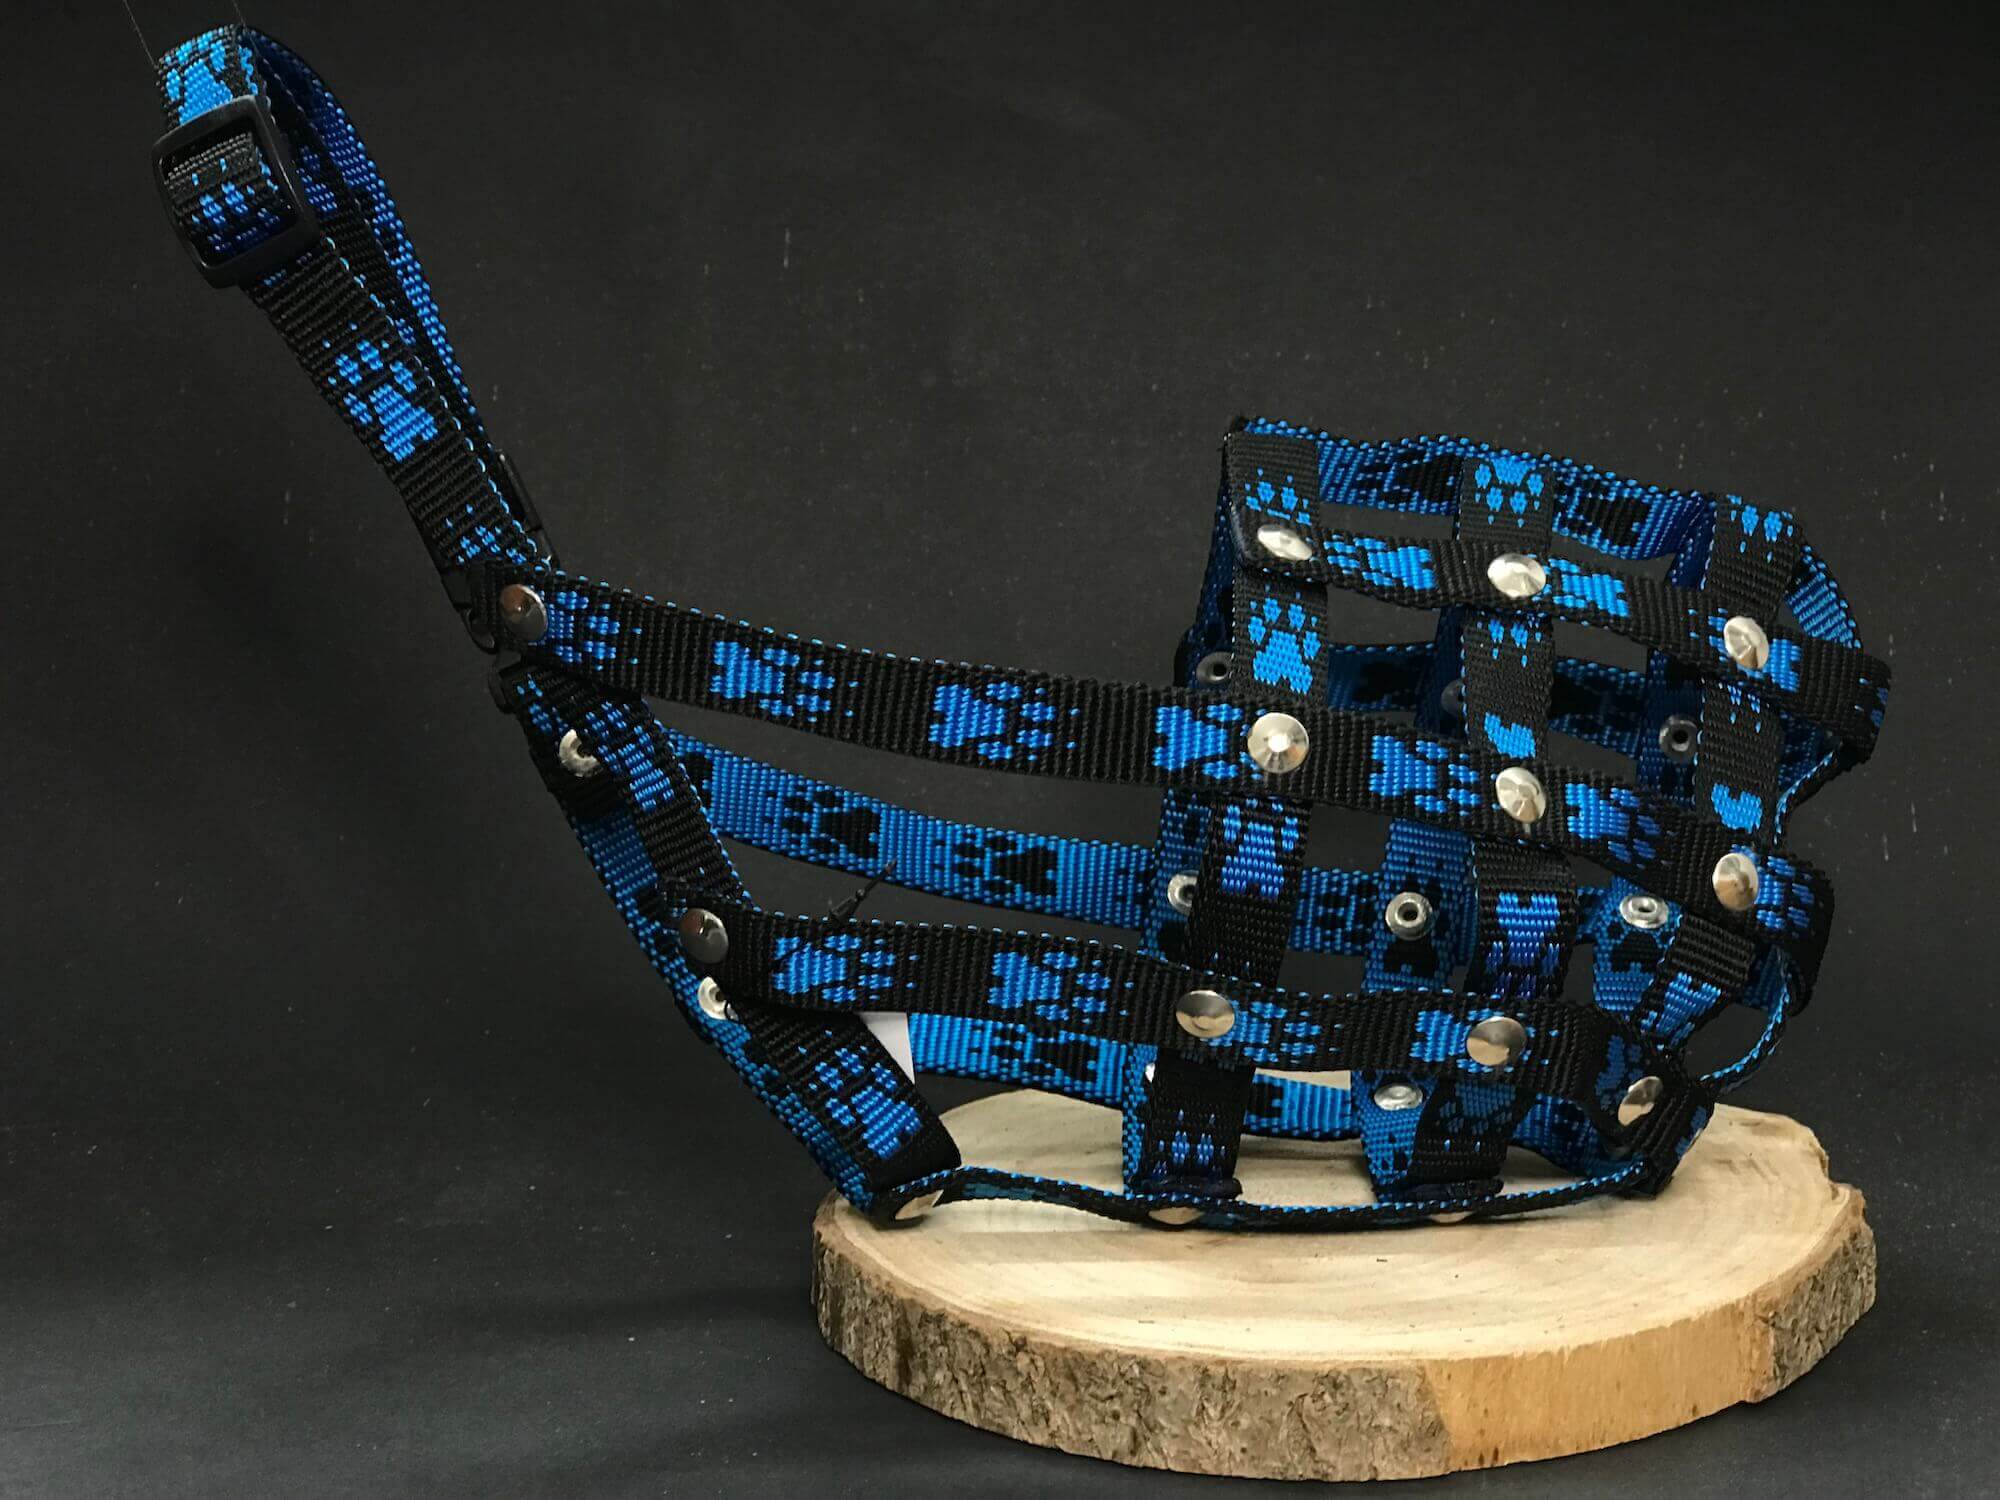 Huč nylonový náhubek pro klasický čumák Barva: Modrá, Obvod čumáku: 30 cm, Délka čumáku: 11 cm